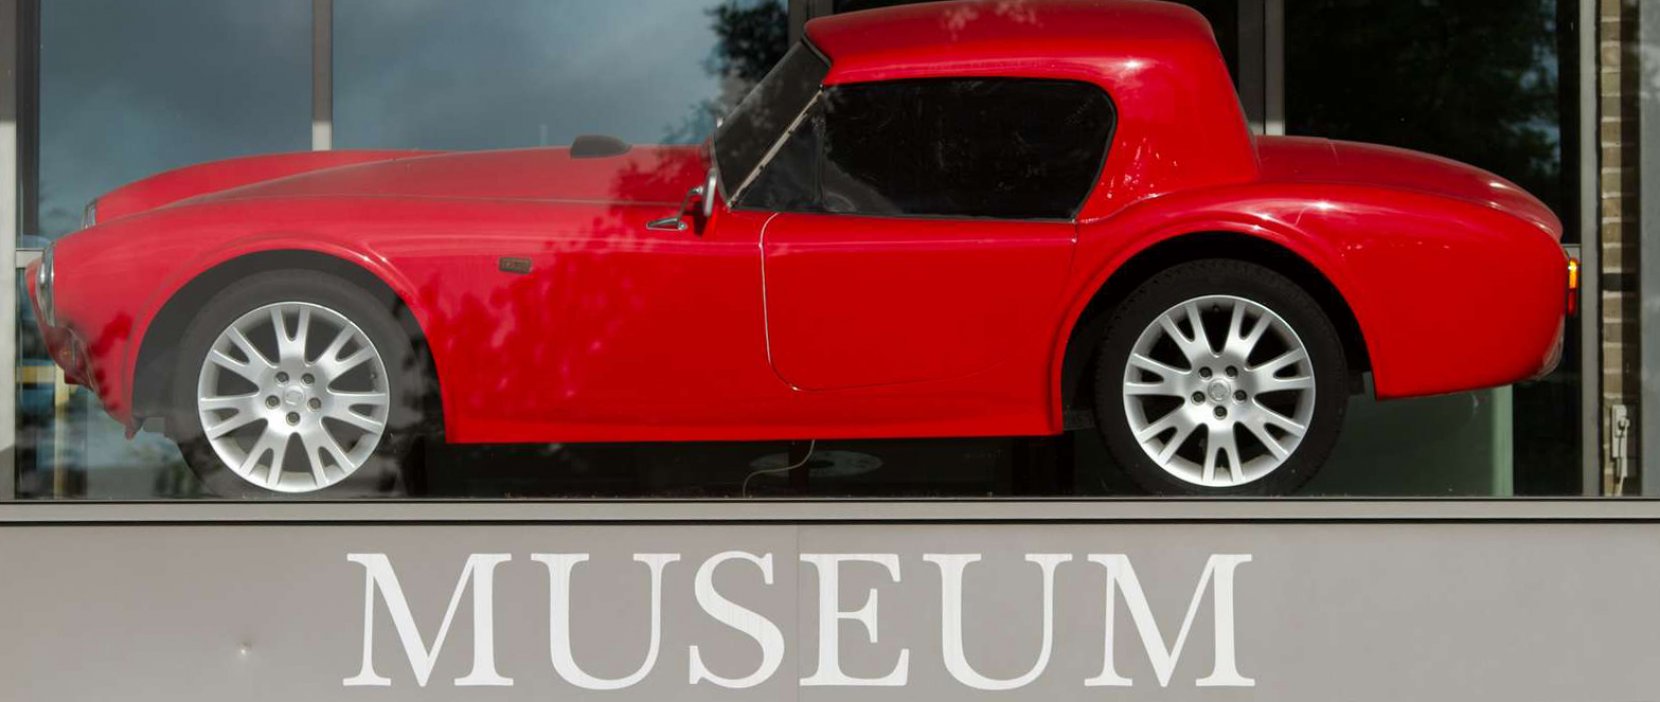 Sommers automobilmuseum header